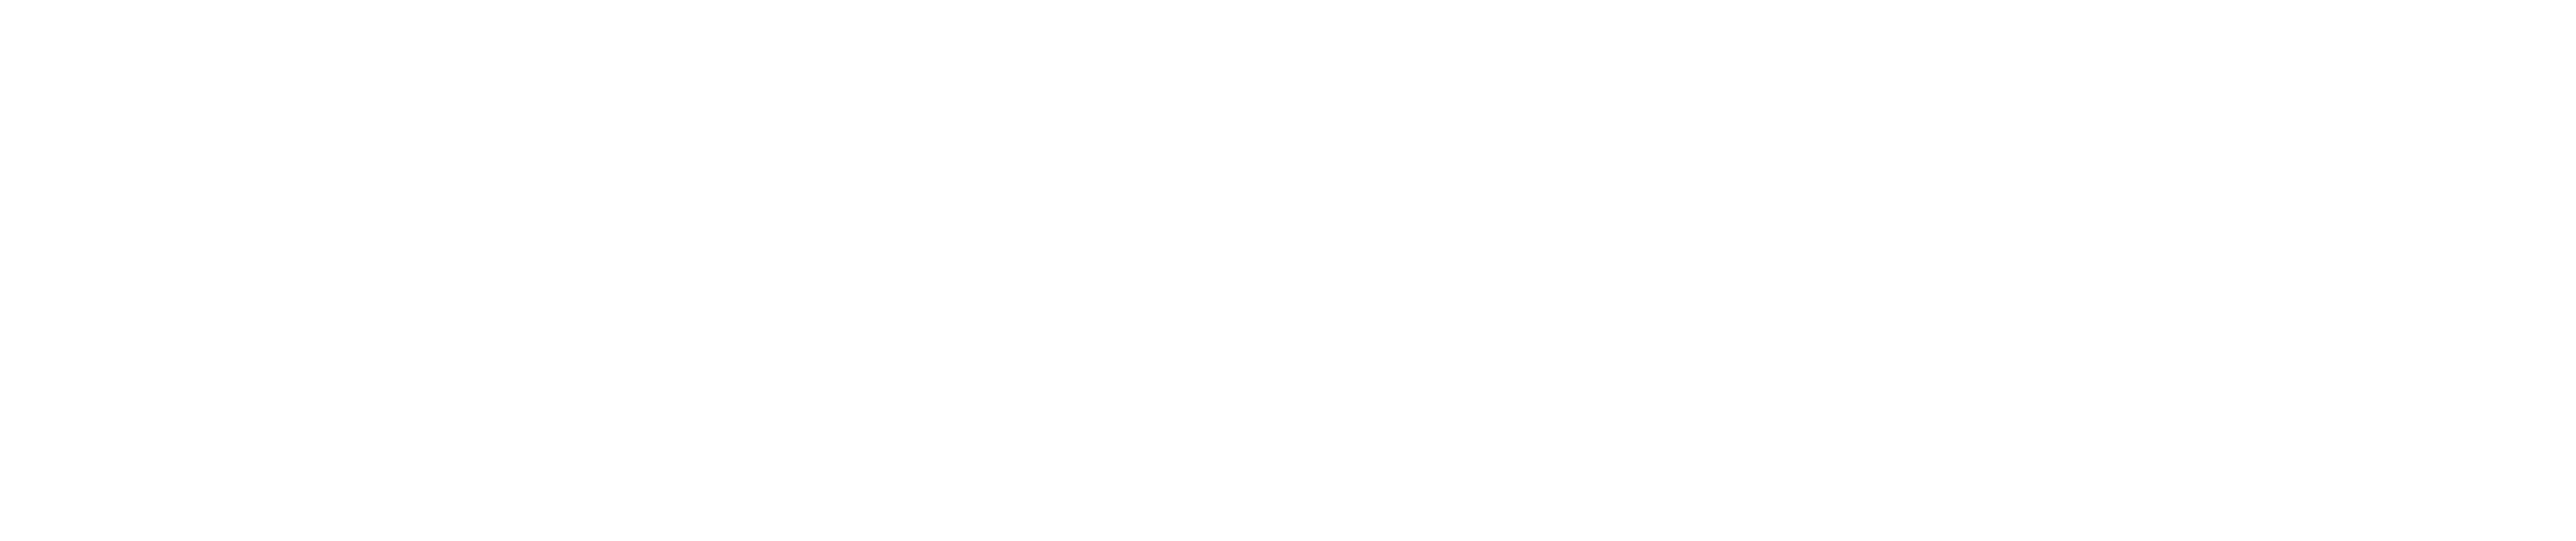 Ruokala brand logo white representing quality kitchen appliances